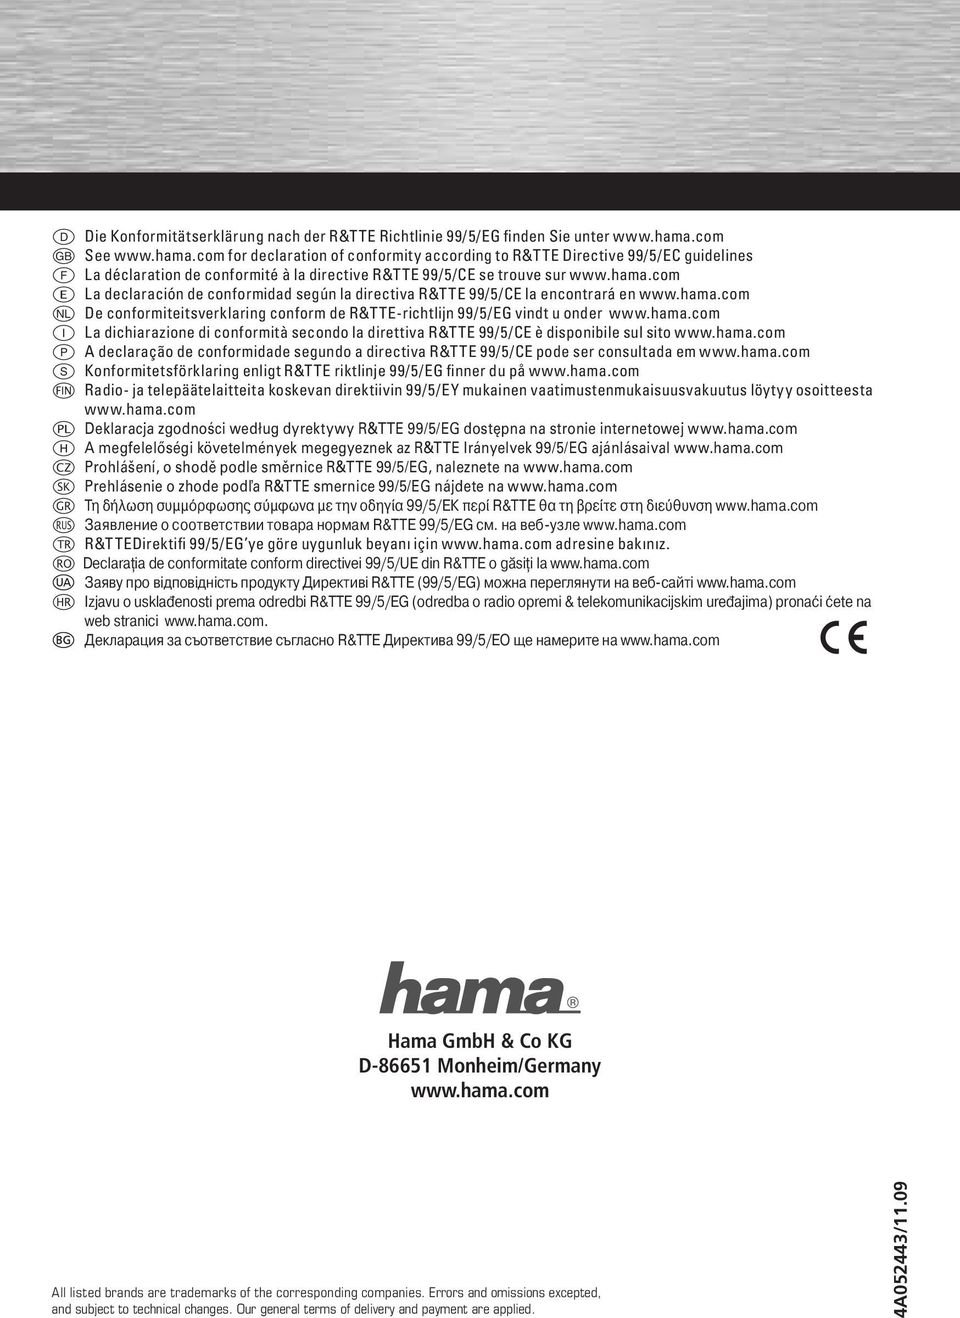 hama.com o De conformiteitsverklaring conform de R&TTE-richtlijn 99/5/EG vindt u onder www.hama.com i La dichiarazione di conformità secondo la direttiva R&TTE 99/5/CE è disponibile sul sito www.hama.com p A declaração de conformidade segundo a directiva R&TTE 99/5/CE pode ser consultada em www.